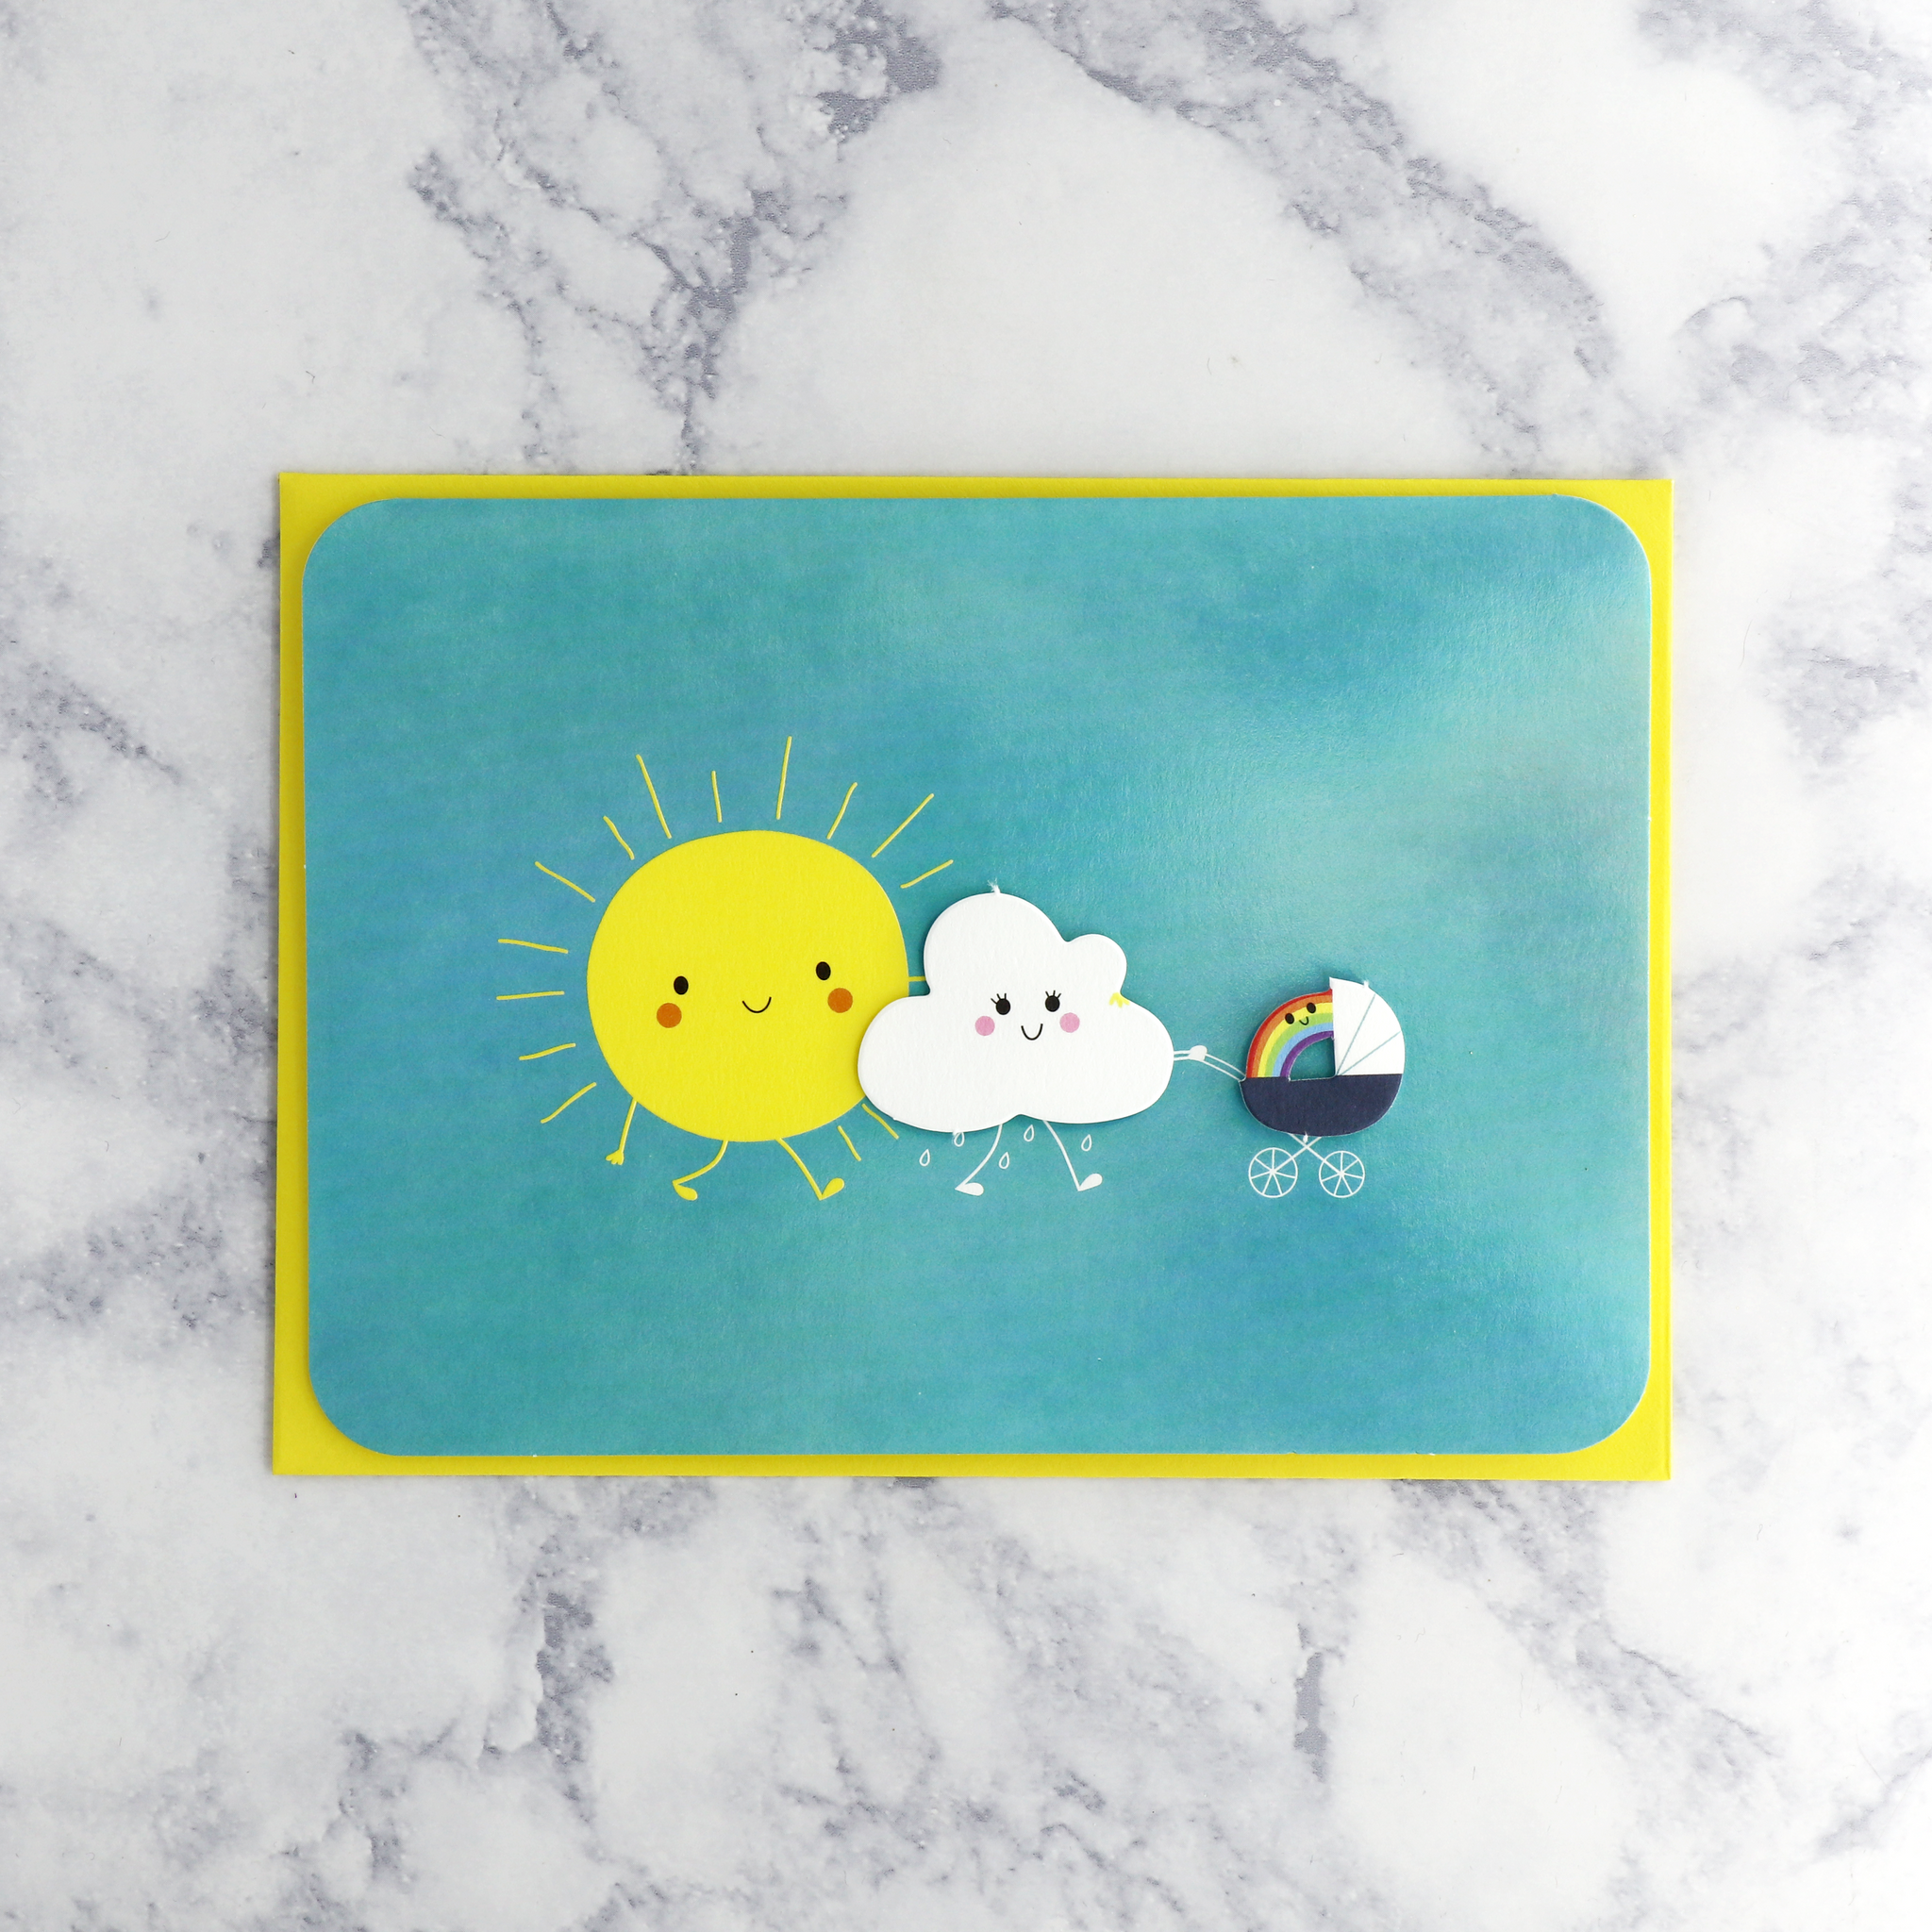 Sun & Cloud Pushing Stroller New Baby Card